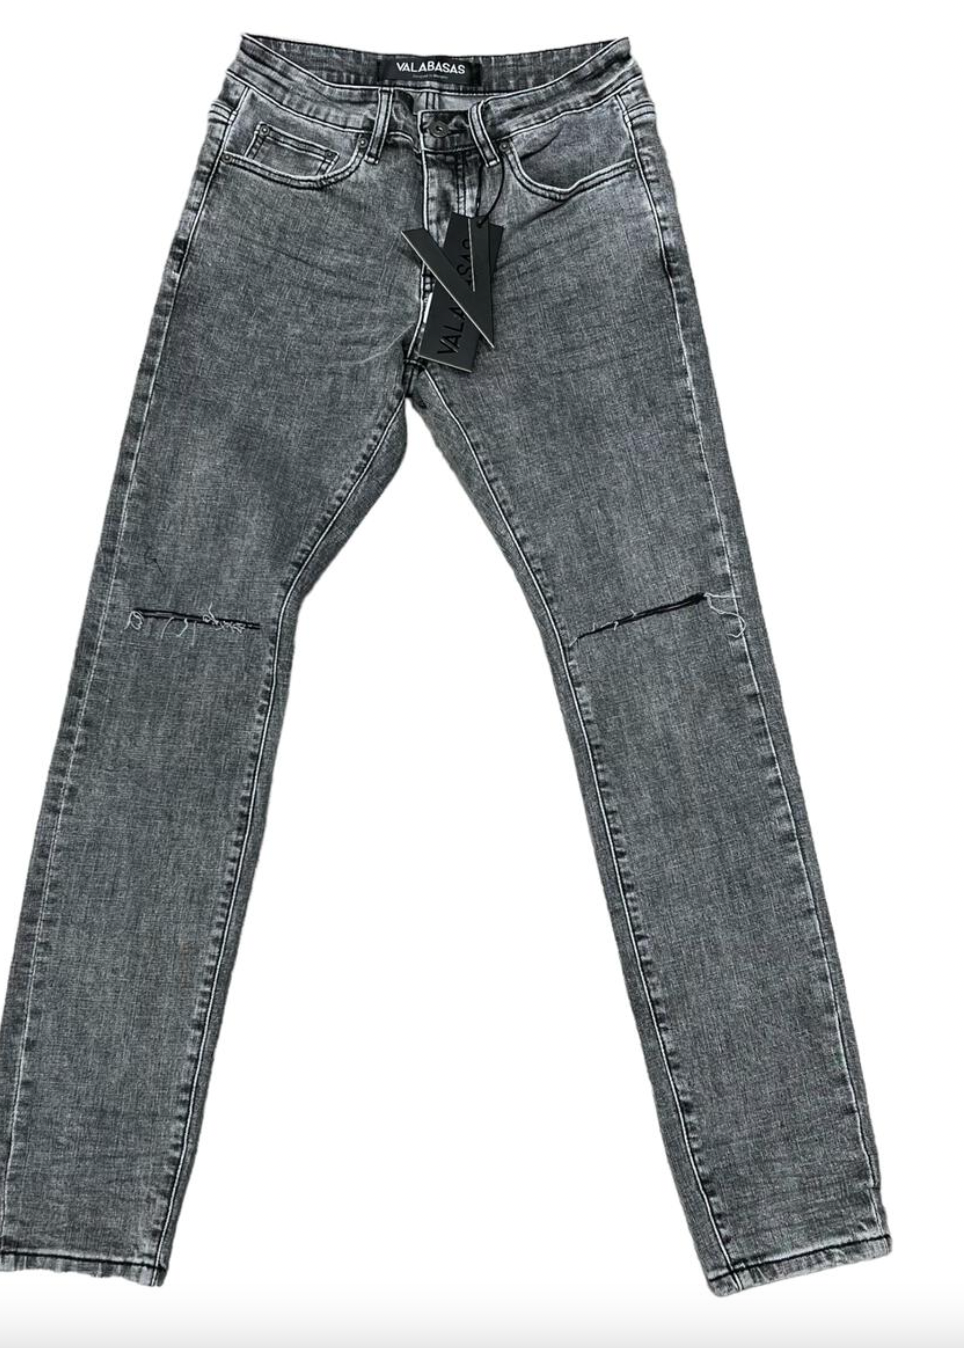 Valabasas Denim Jeans